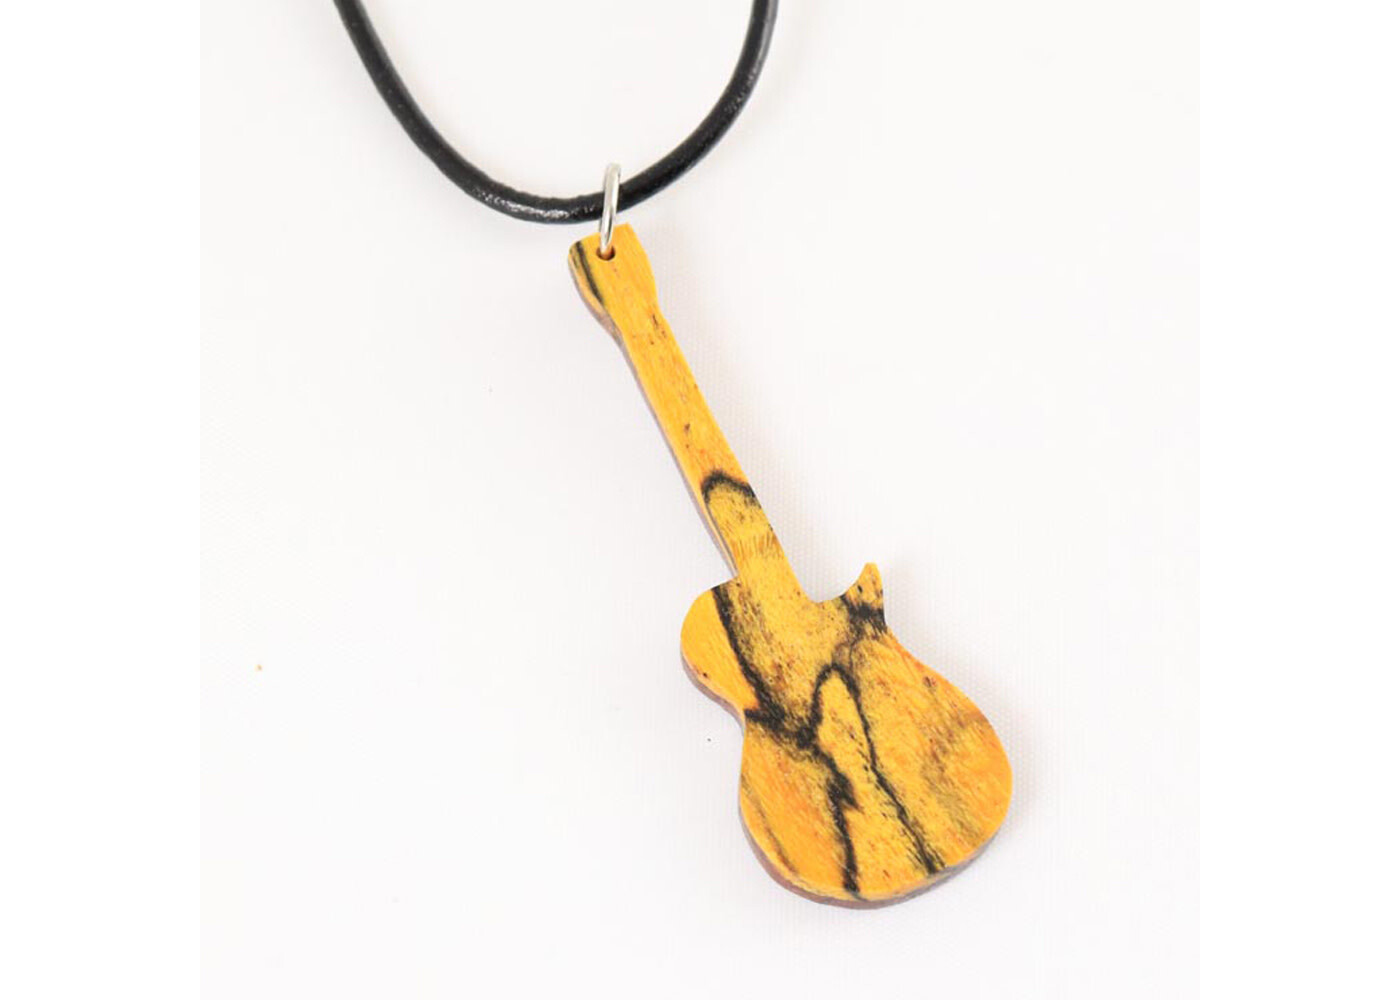 Steven Ashley Steven Ashley Handmade Wood Guitar Pick Necklace